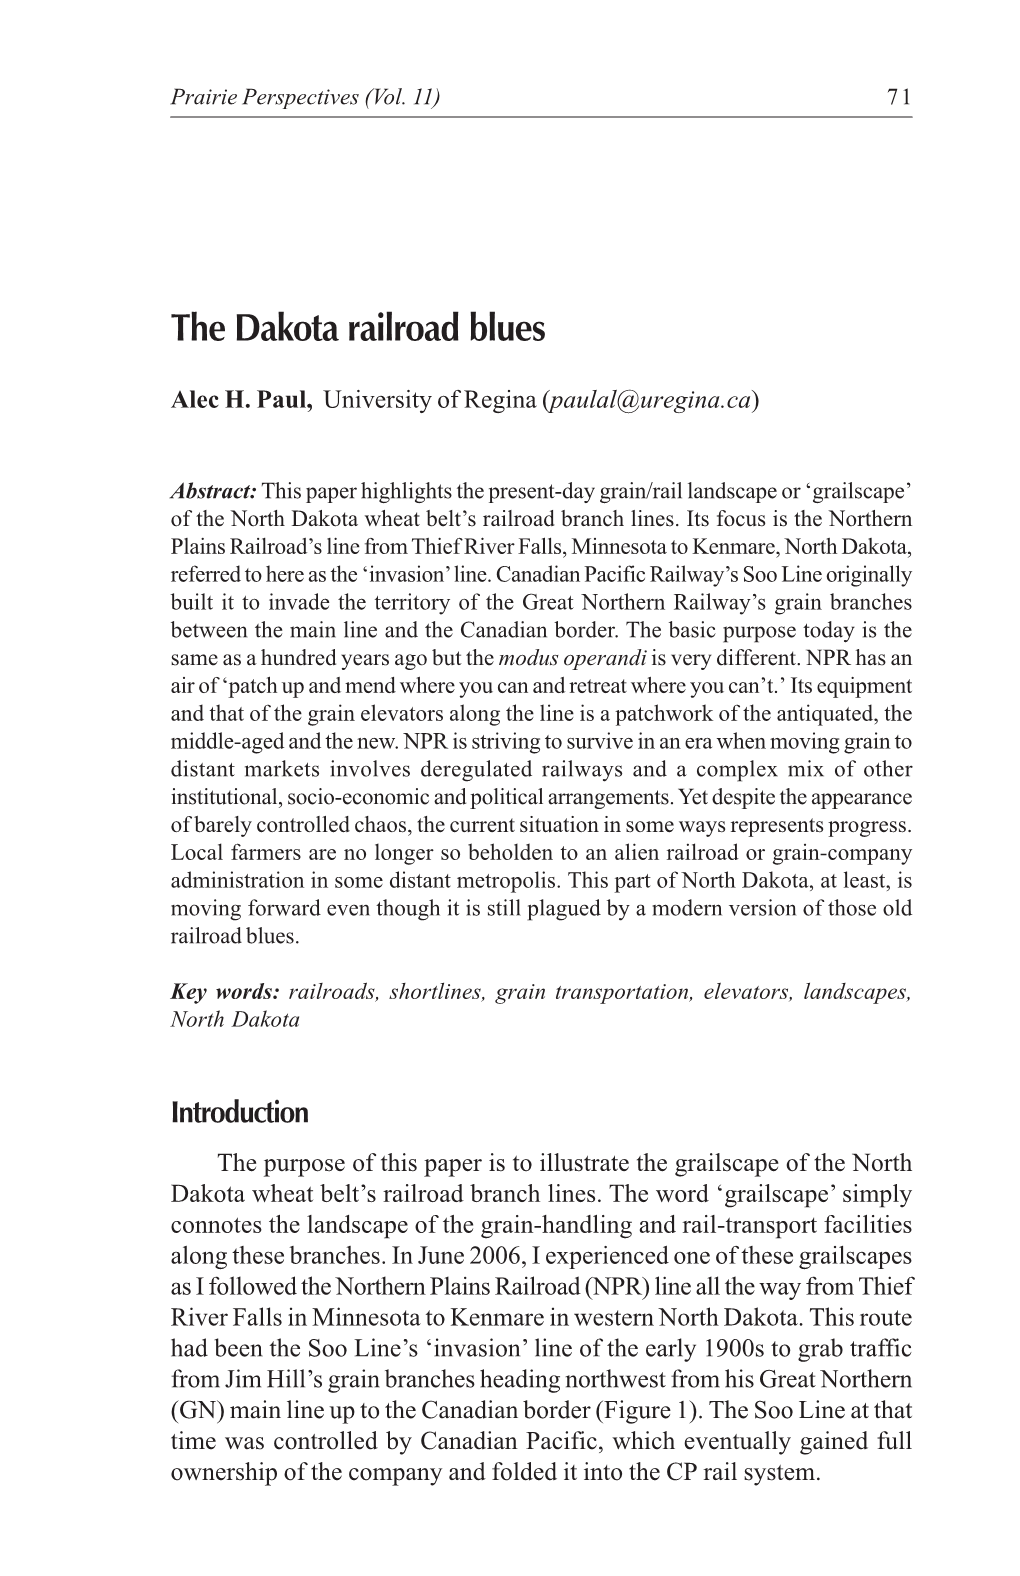 The Dakota Railroad Blues